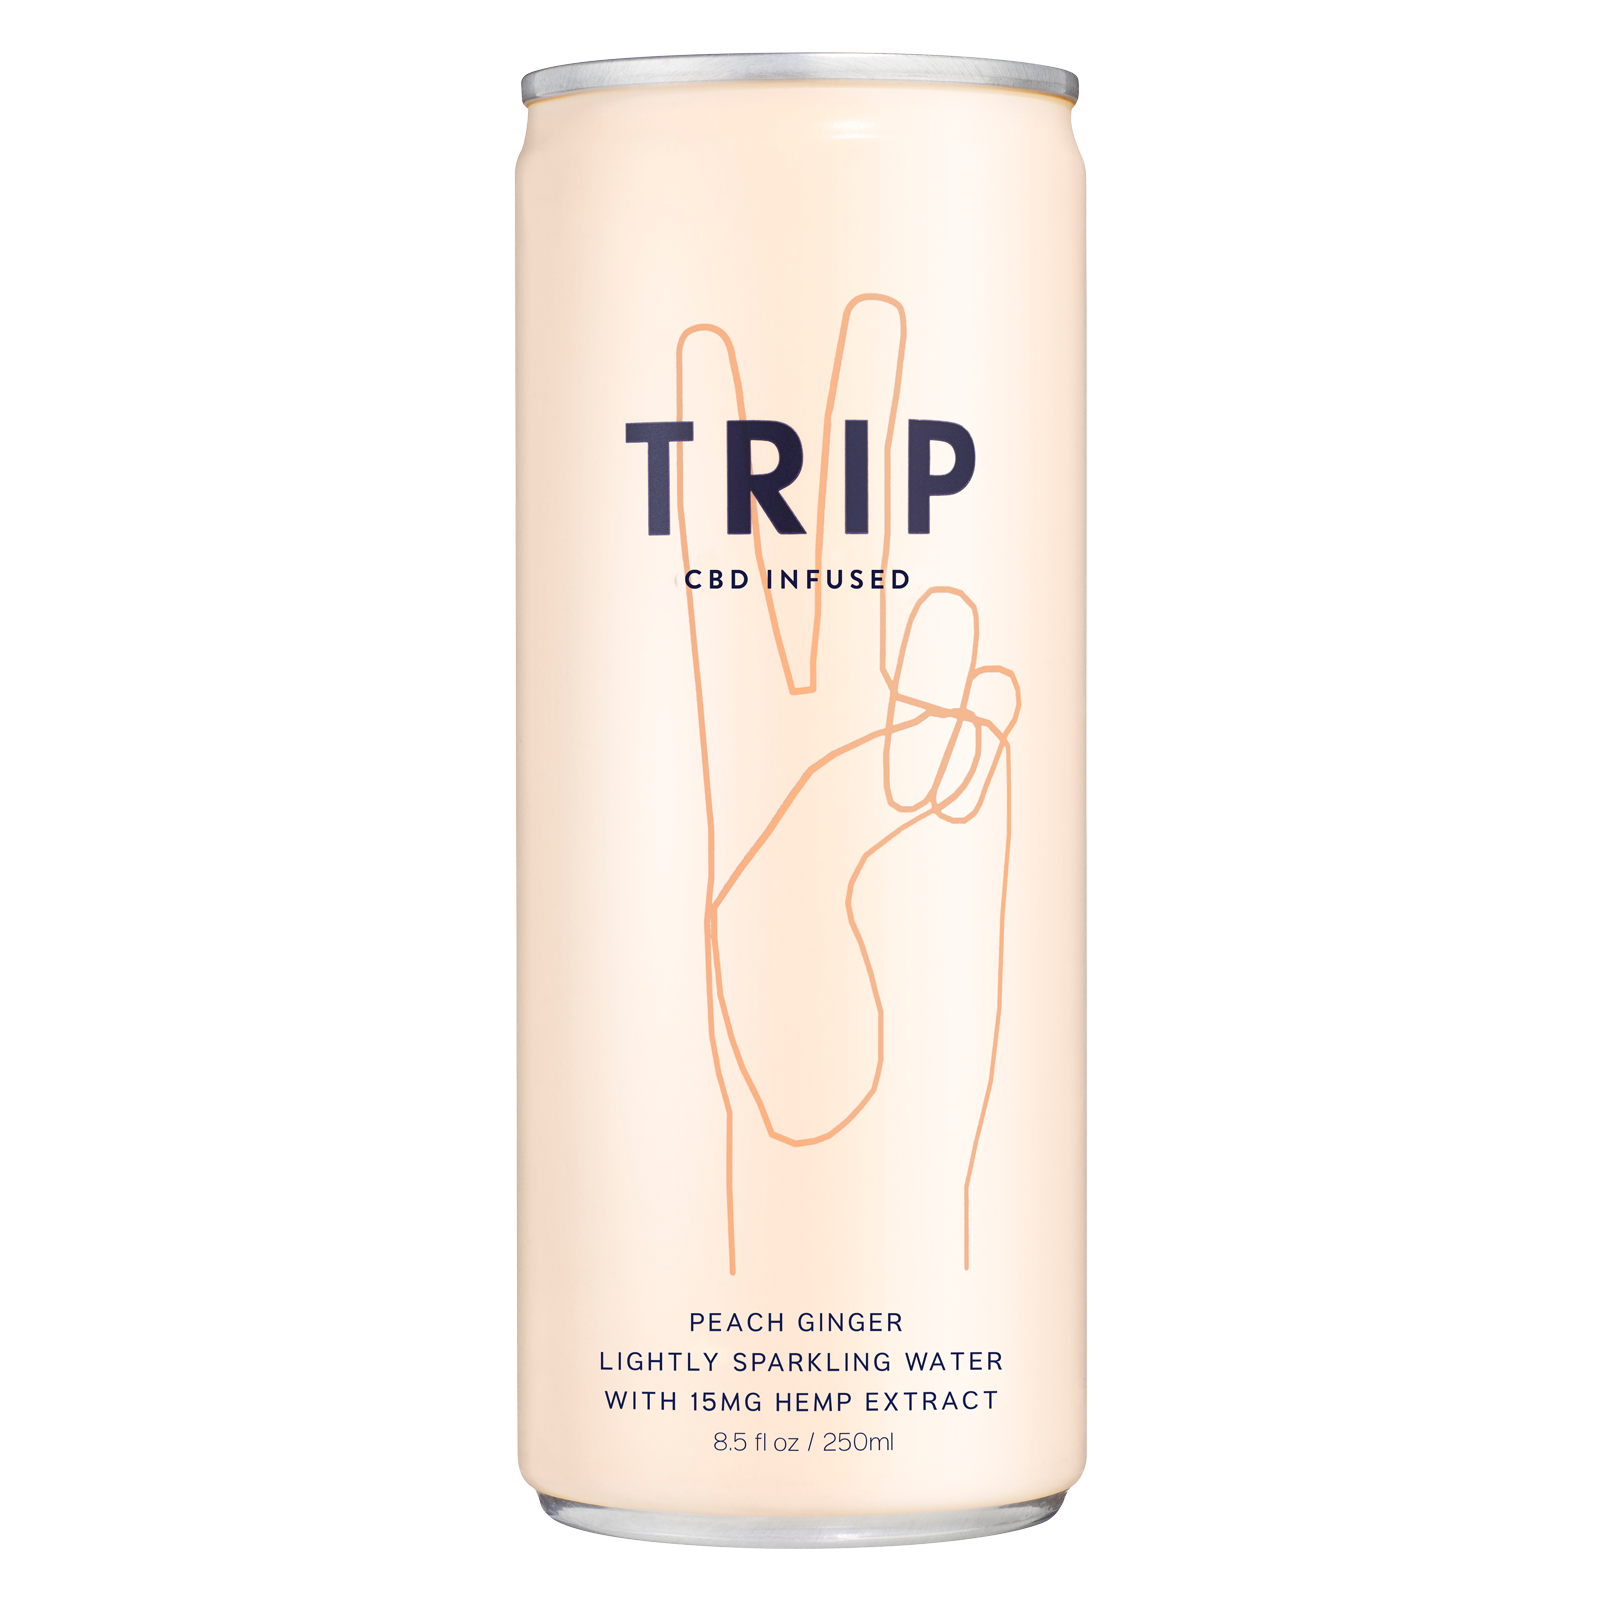 TRIP Peach Ginger CBD Infused Drink 8.5oz